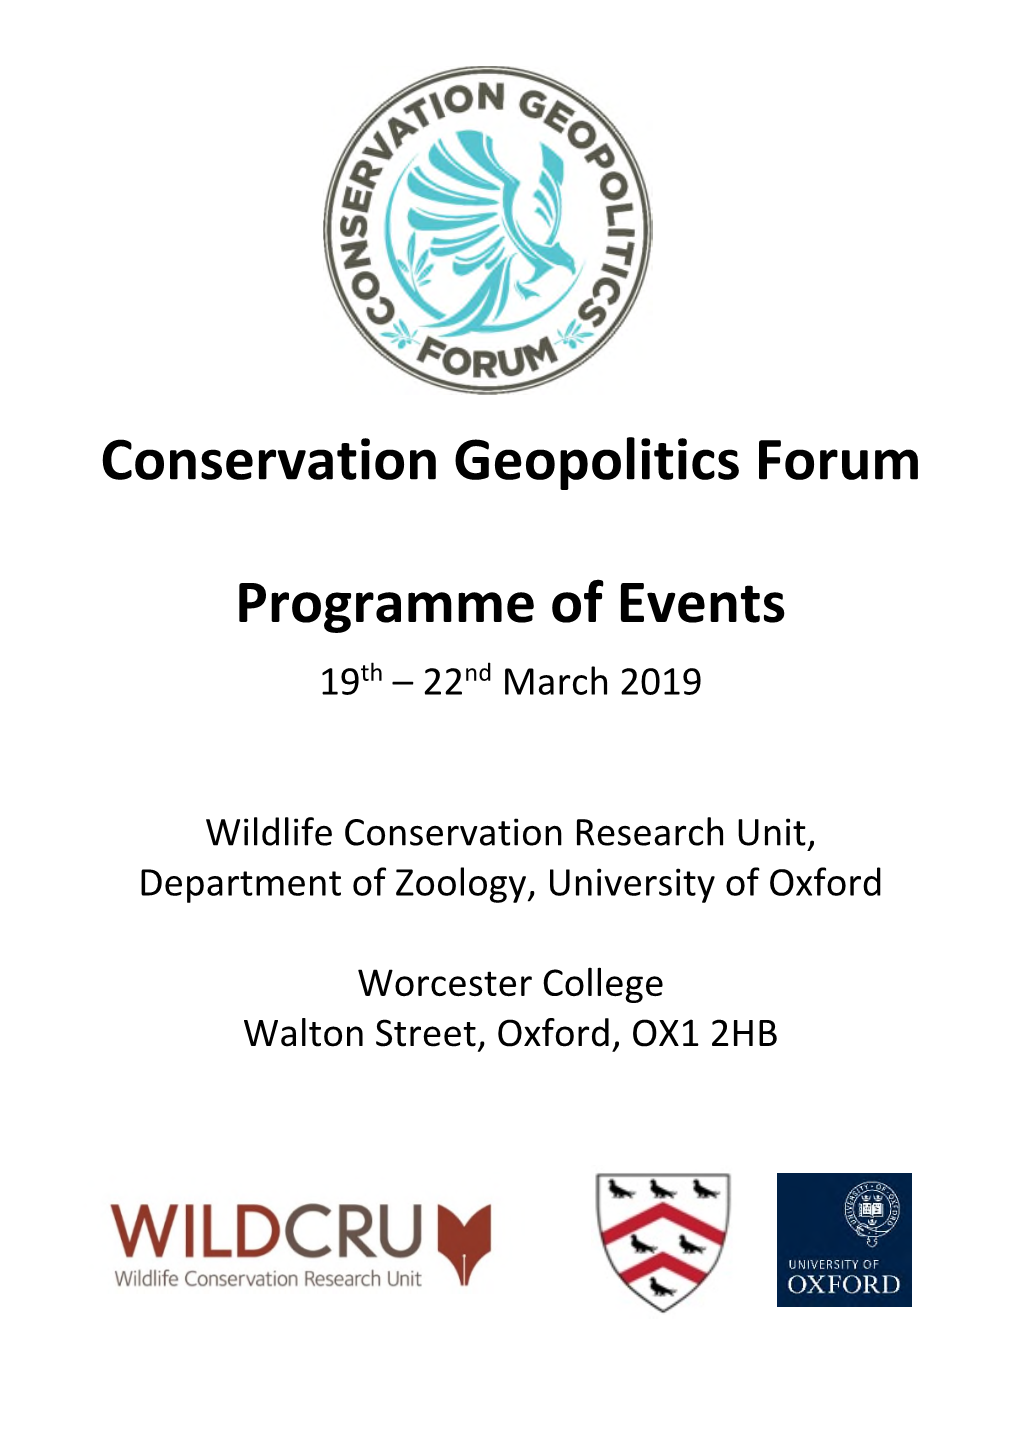 Conservation Geopolitics Forum Programme of Events